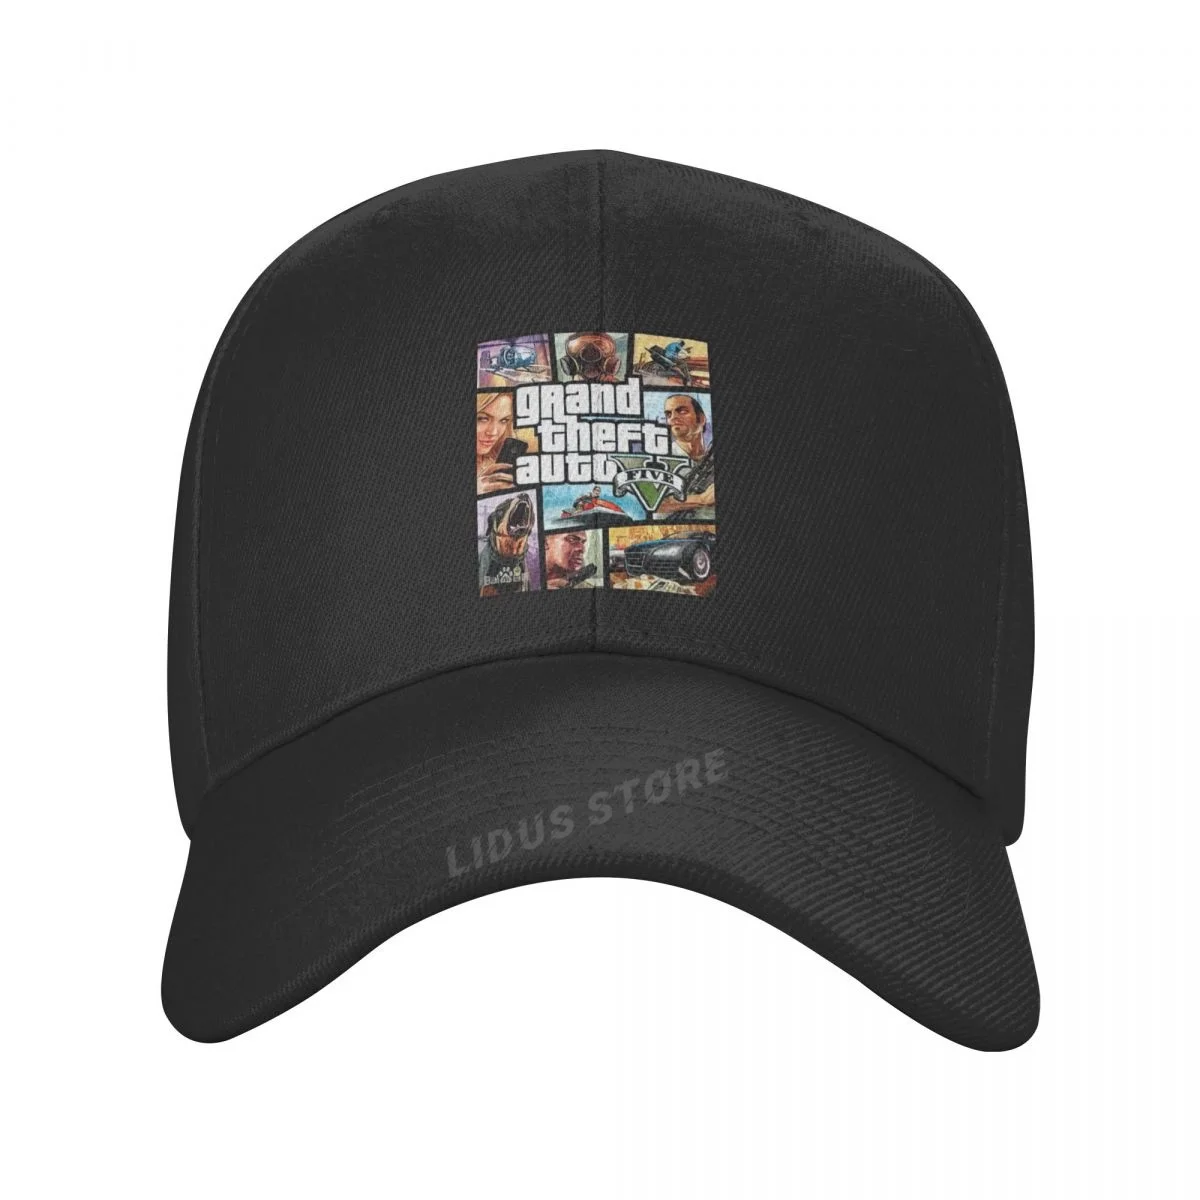 

Grand Theft Auto V5 Baseball Caps Hot Game GTA 5 Fans Hip-hop Cap Fashion Brand Gta5 Men Snapback Hat Summer Trucker Hats